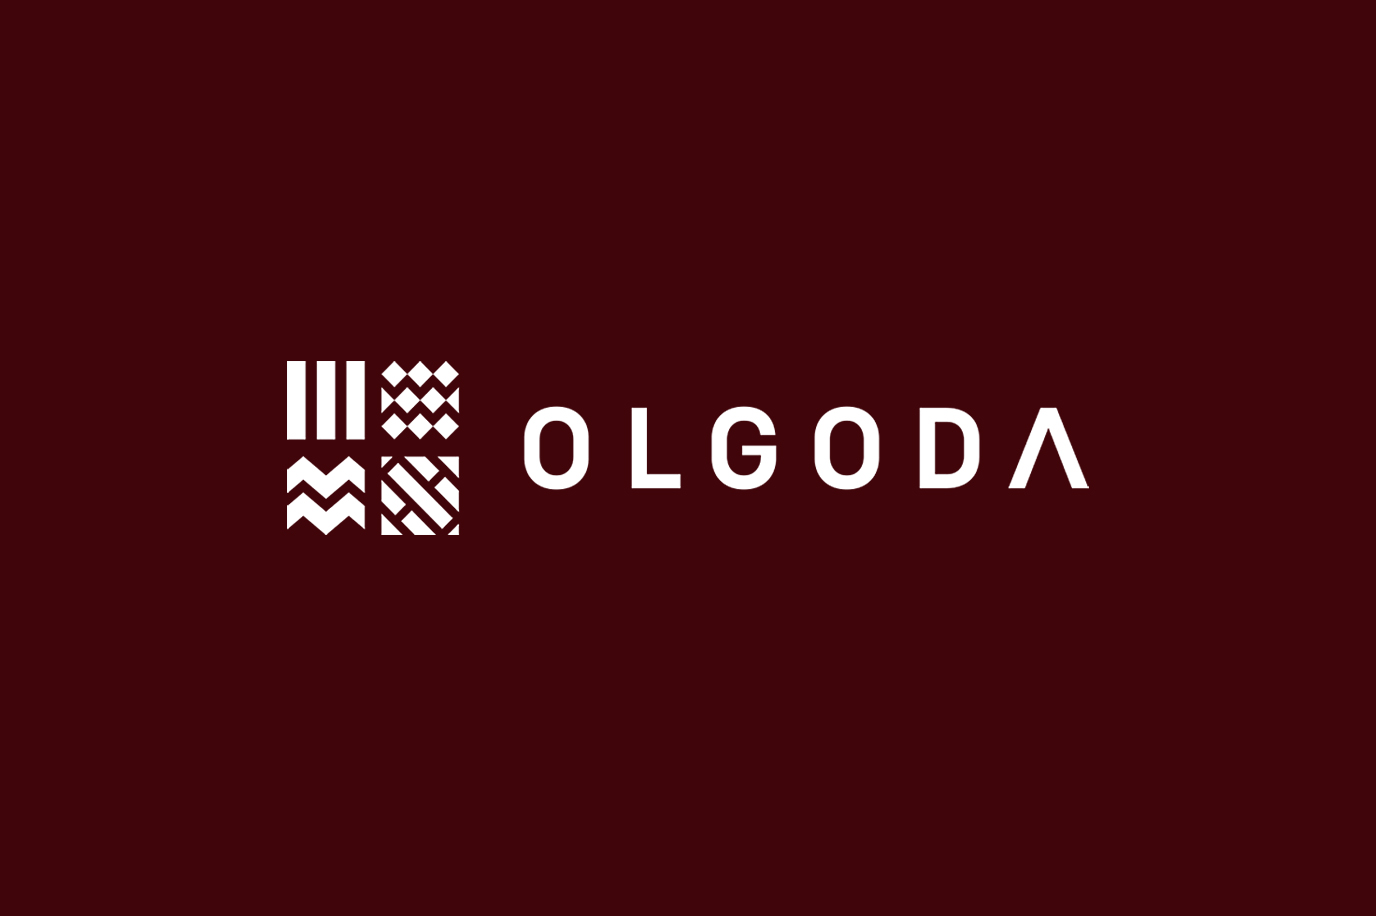 OLGODA Branding and Launching Communication